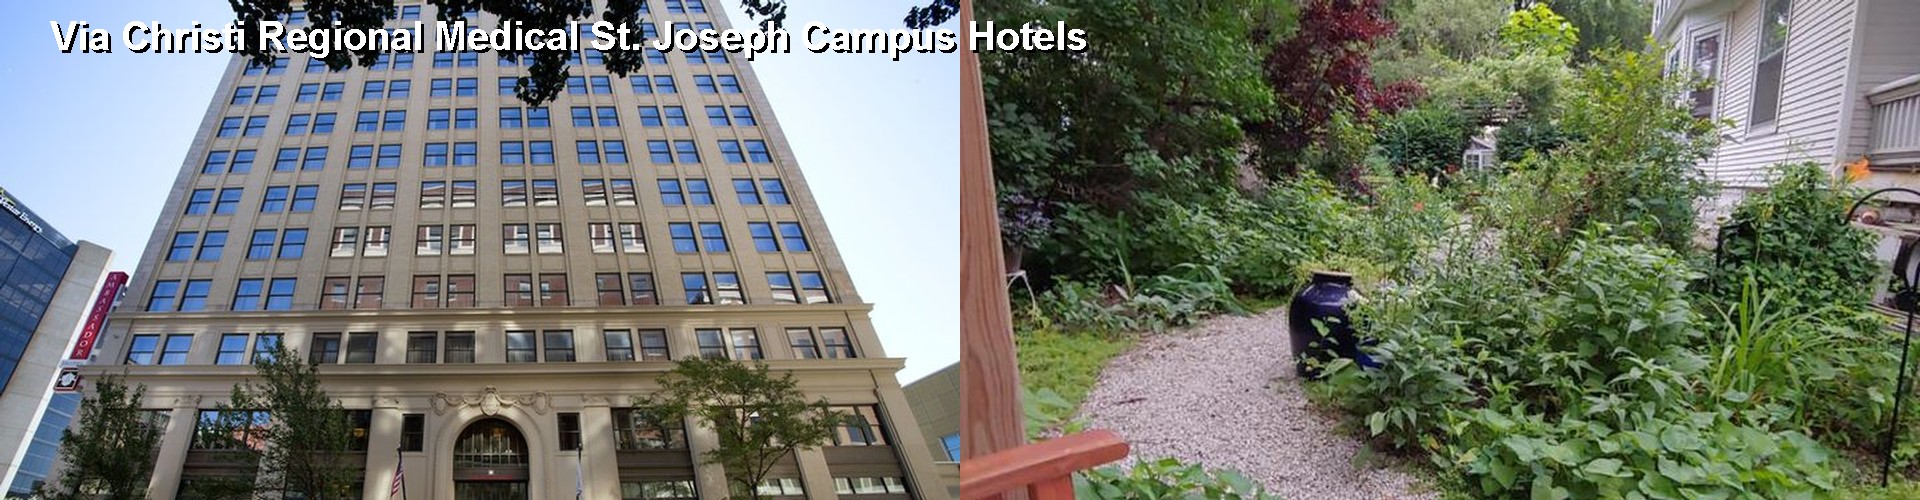 5 Best Hotels near Via Christi Regional Medical St. Joseph Campus